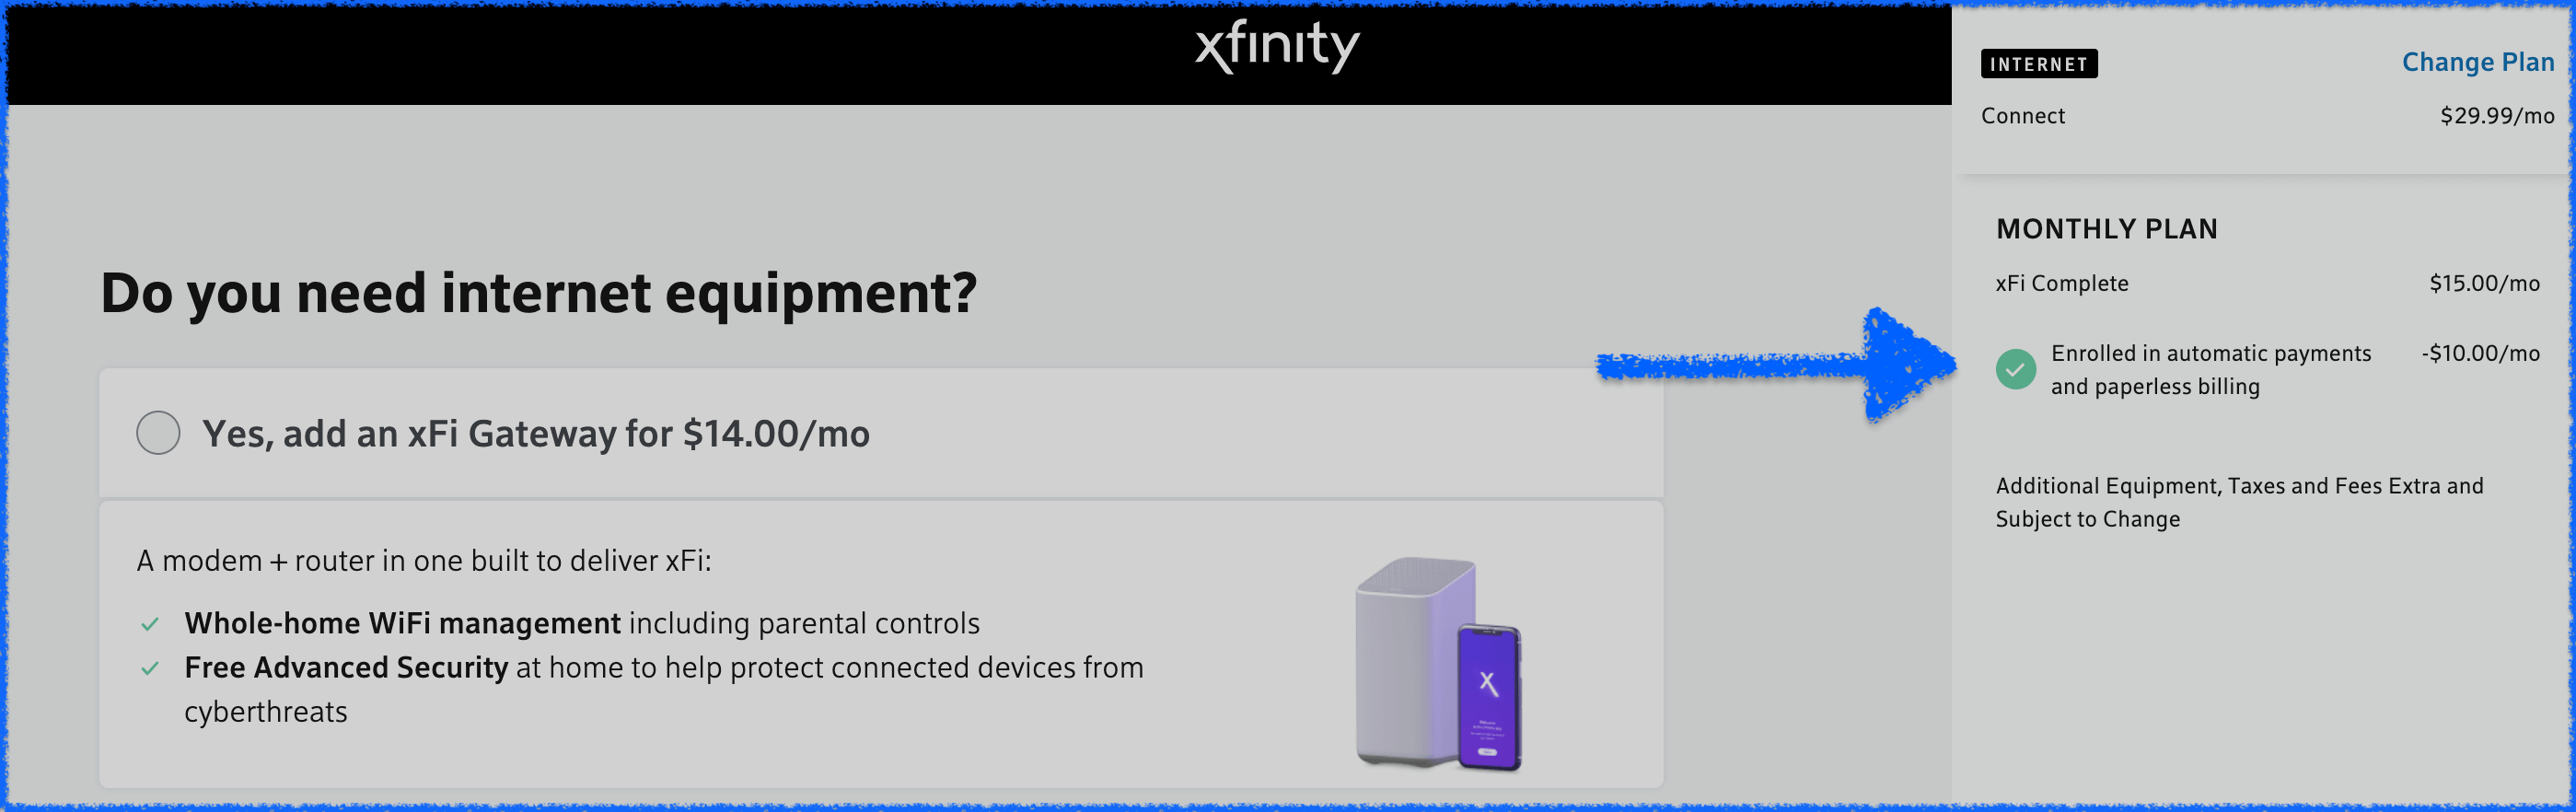 Xfinity checkout flow example screenshot.